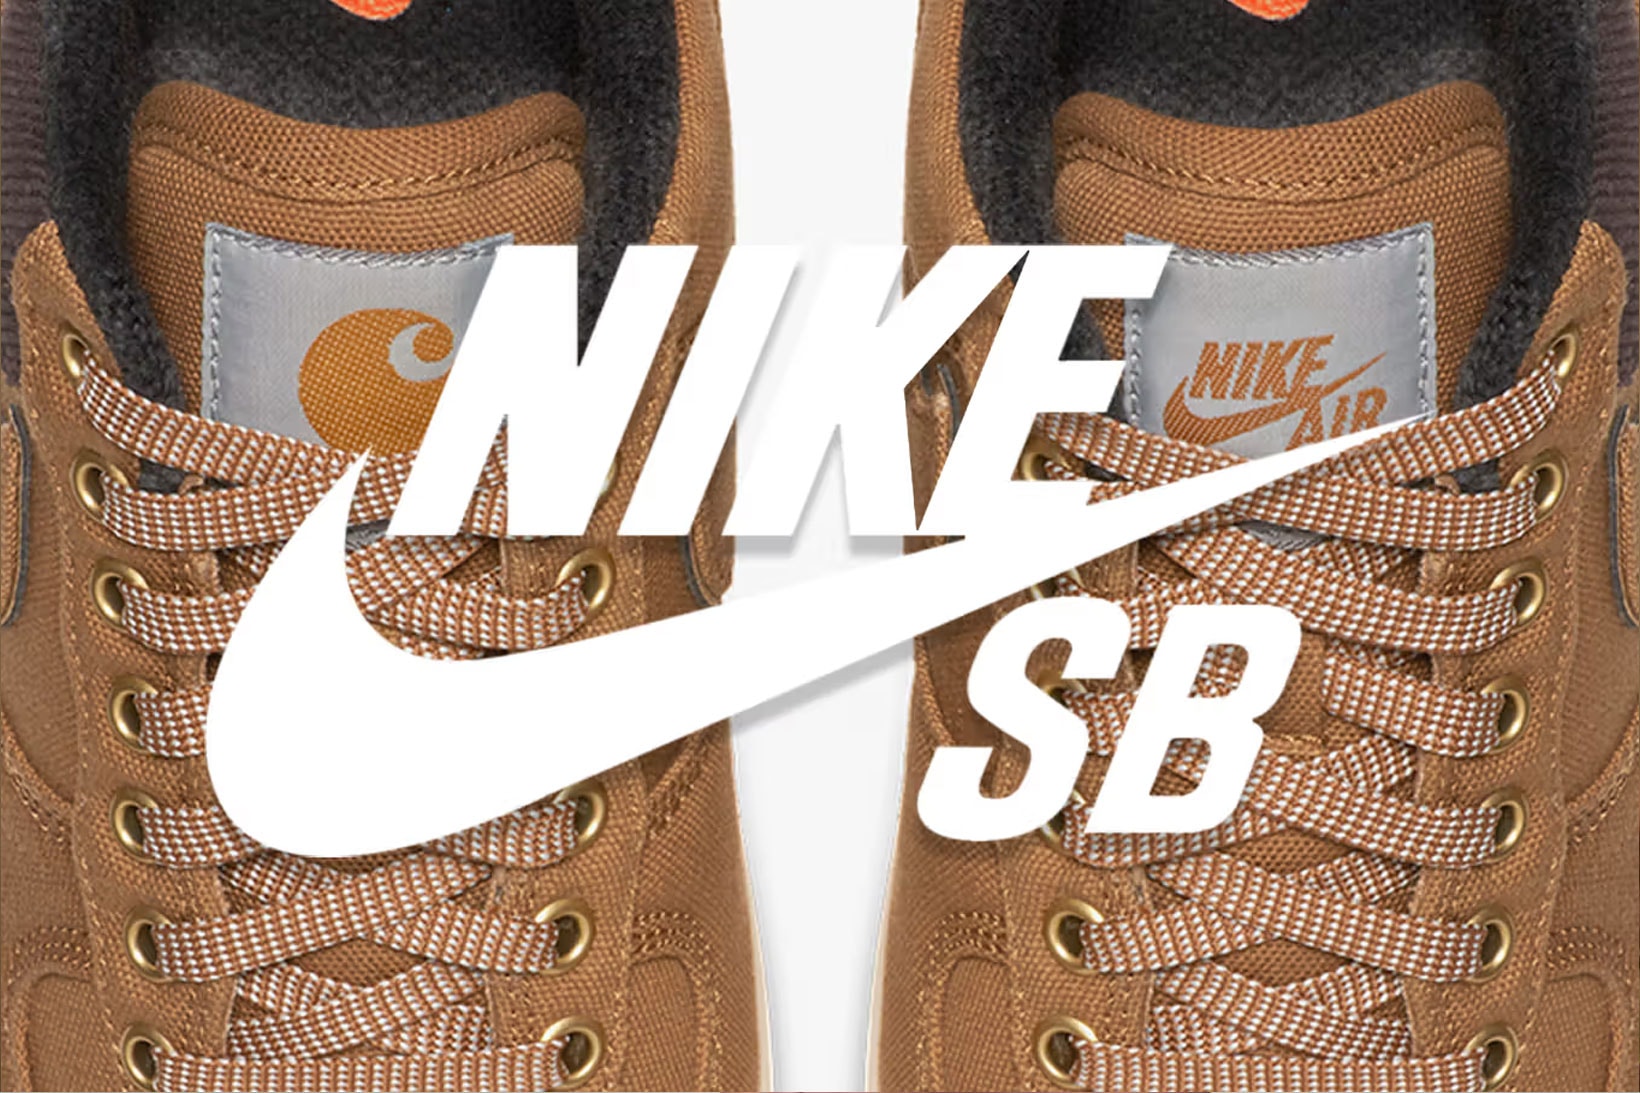 Carhartt Nike SB Collaboration Rumors Release Info